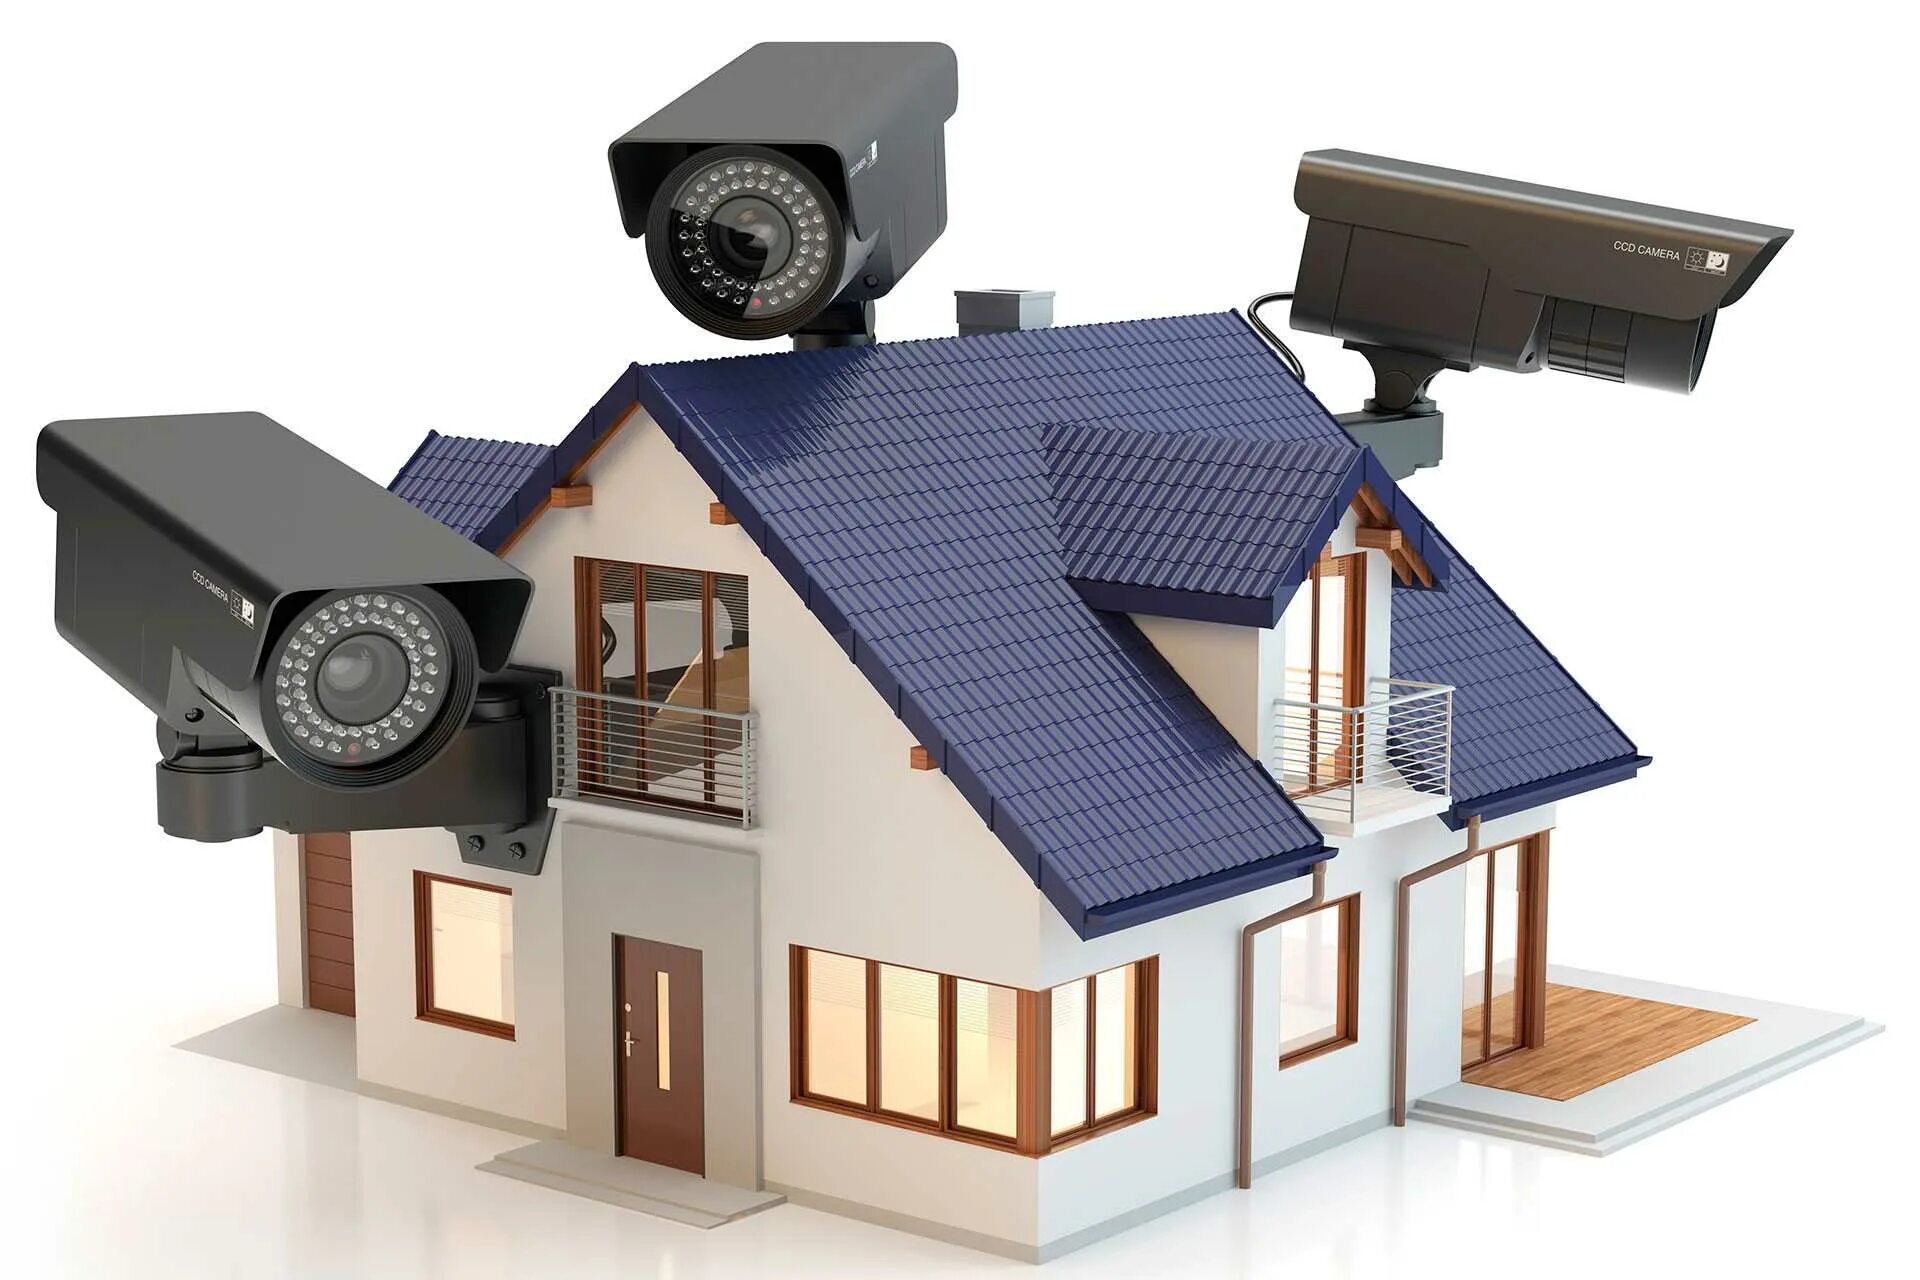 Keep the latest on home security systems. Домик для камеры видеонаблюдения. Умный дом камеры видеонаблюдения. Камера видеонаблюдения фон. Видеонаблюдение периметра территории.